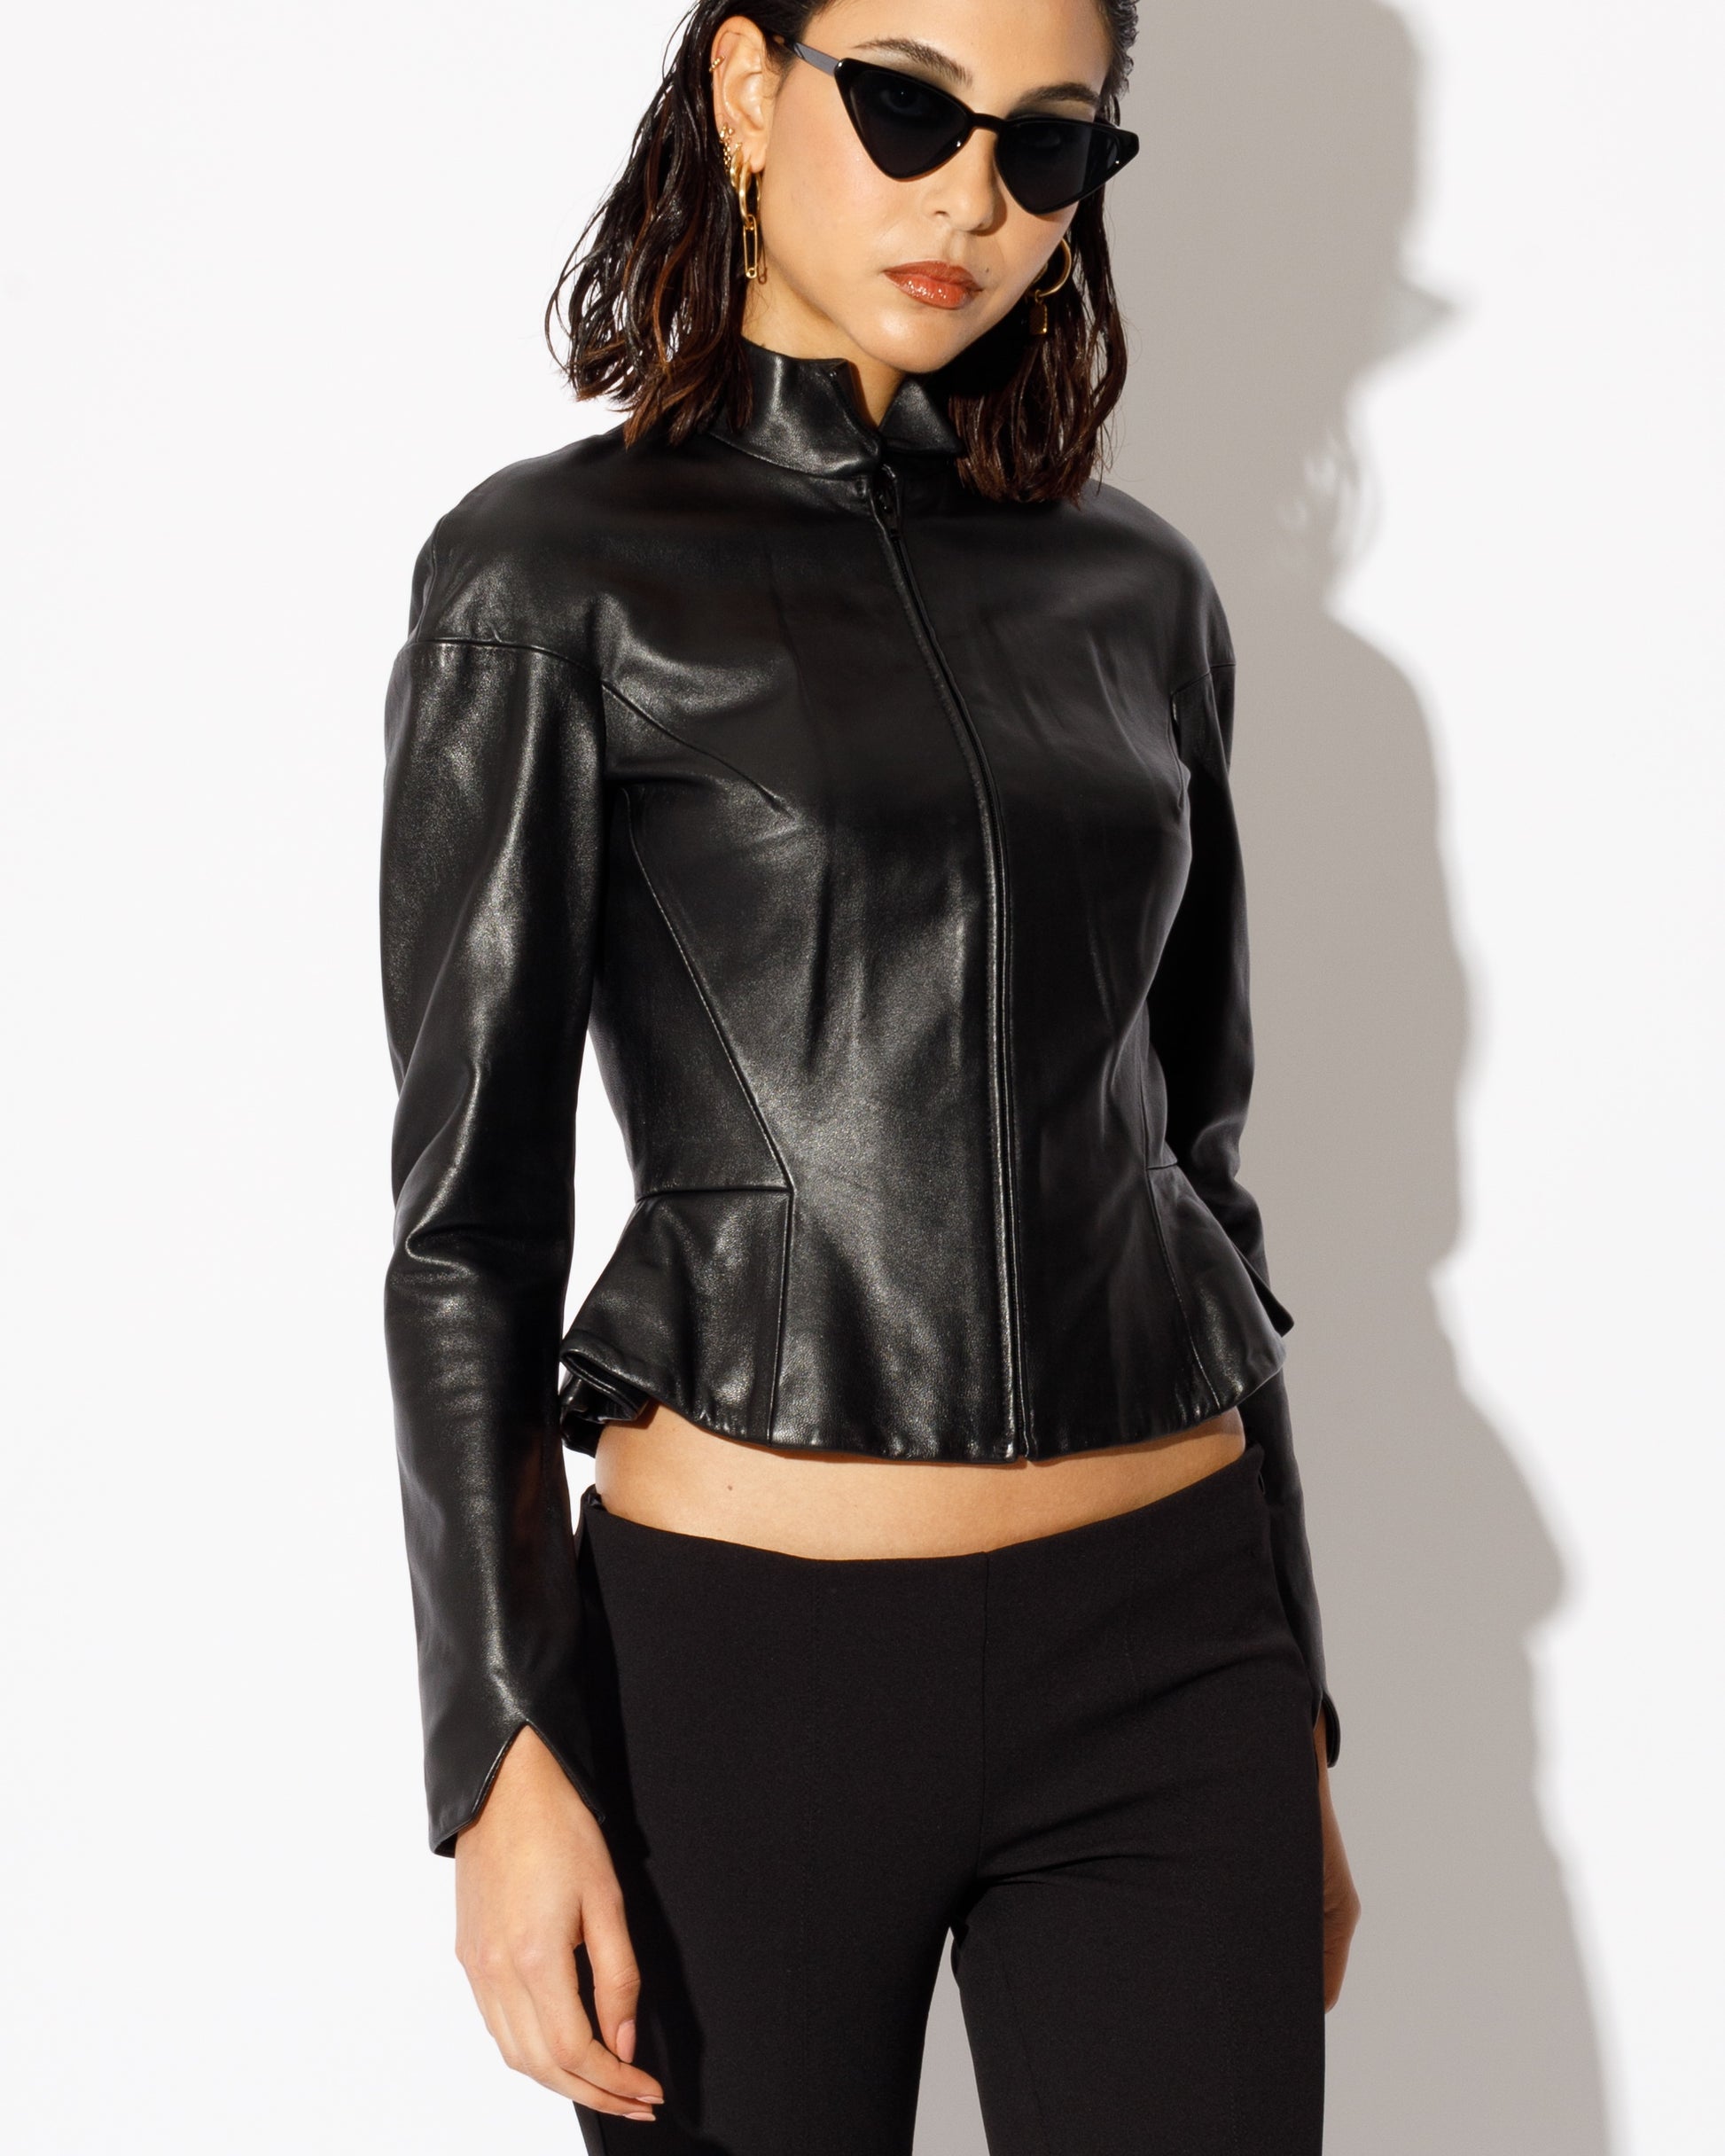 black leather jacket with peplum